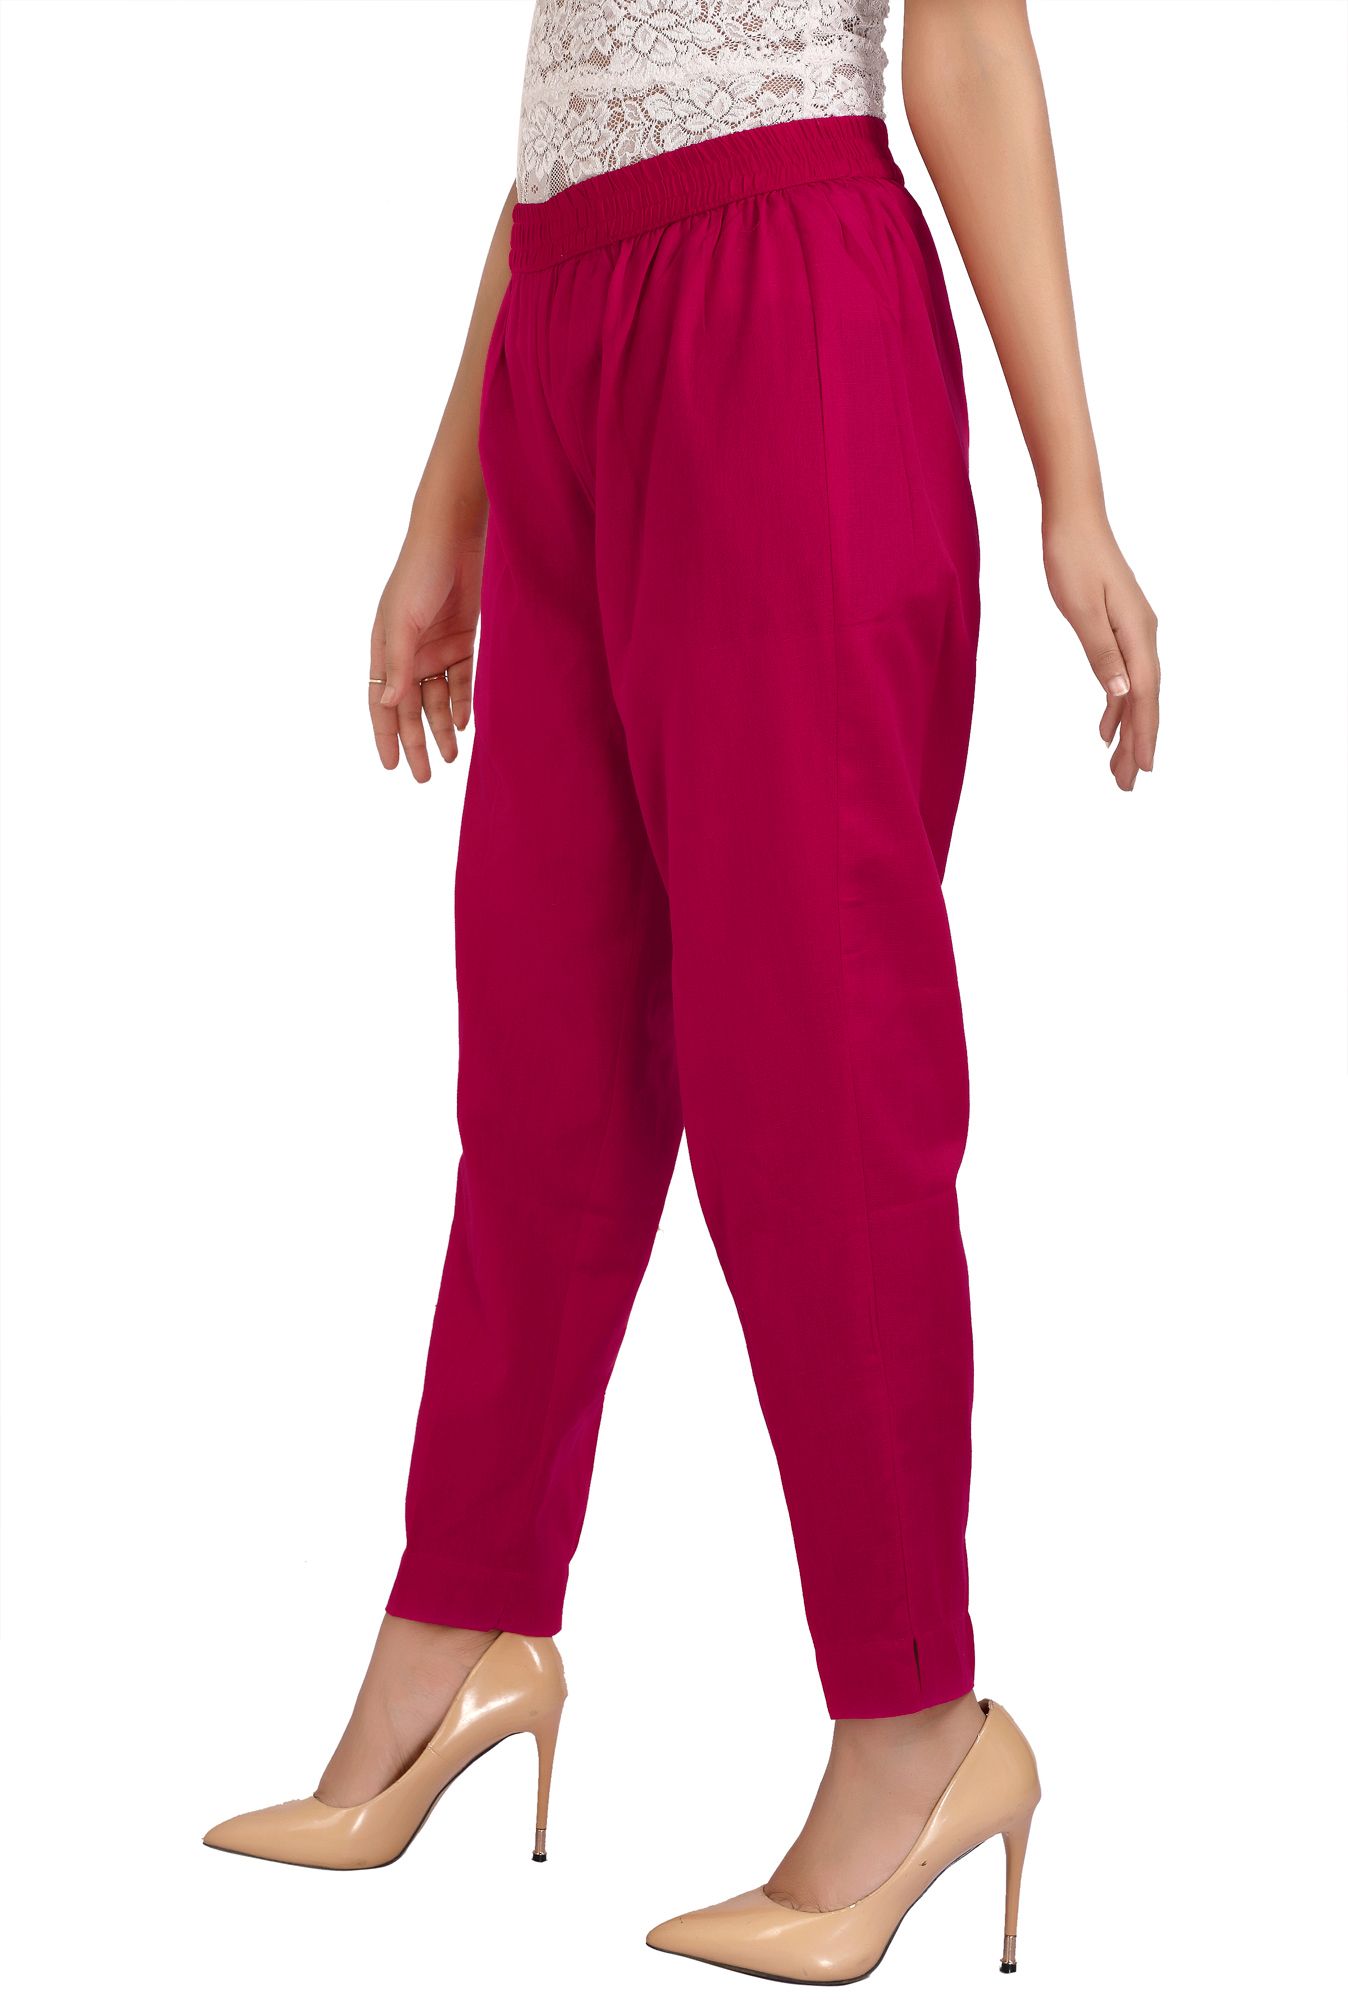 Women's Rani Pink Cotton Pant